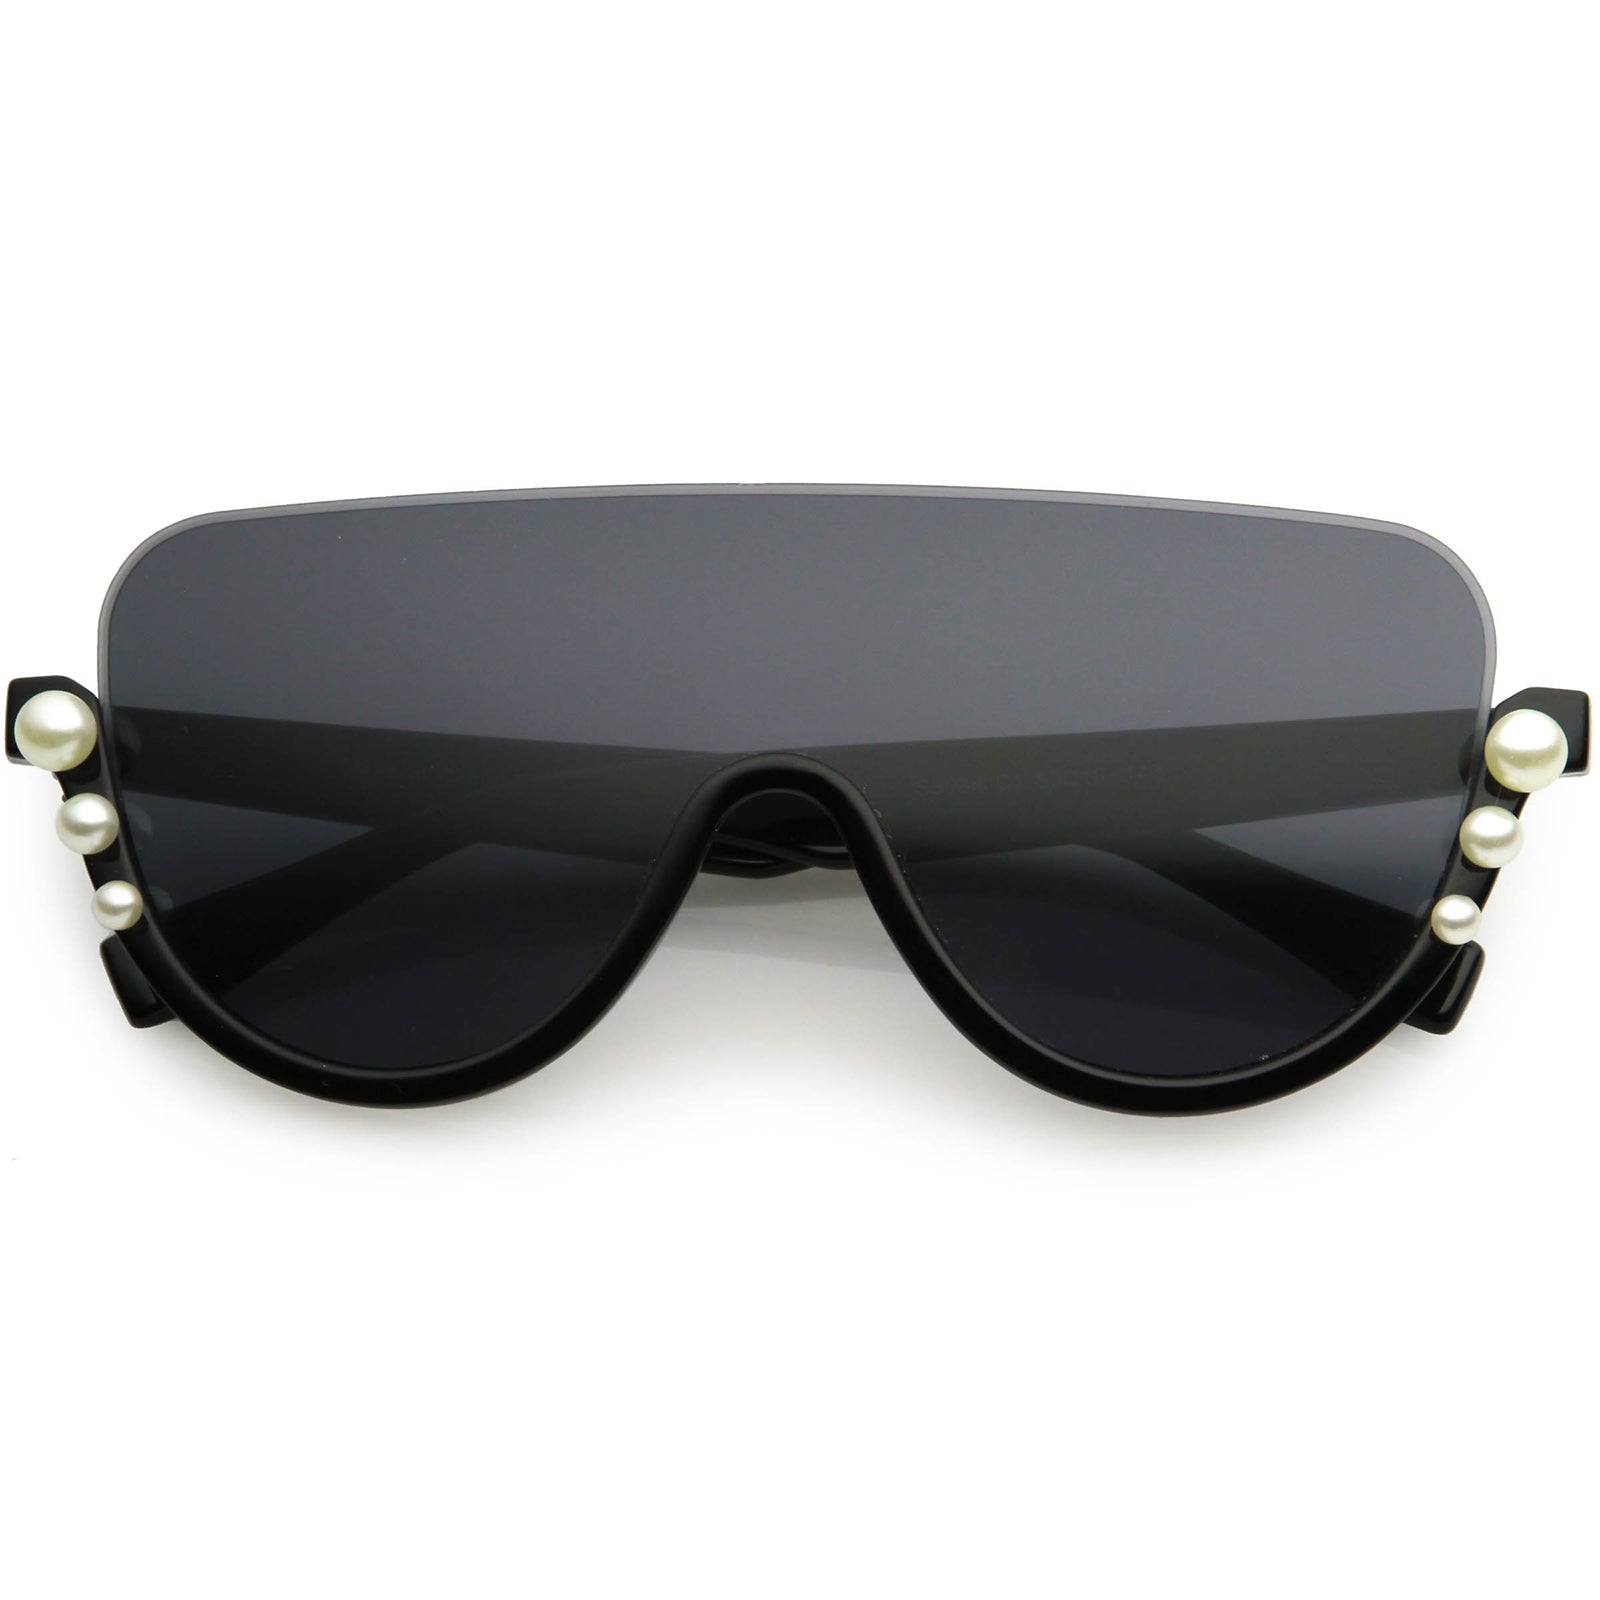 Fendi Mask Logo Sunglasses in Matte Black /Smoke Mirror